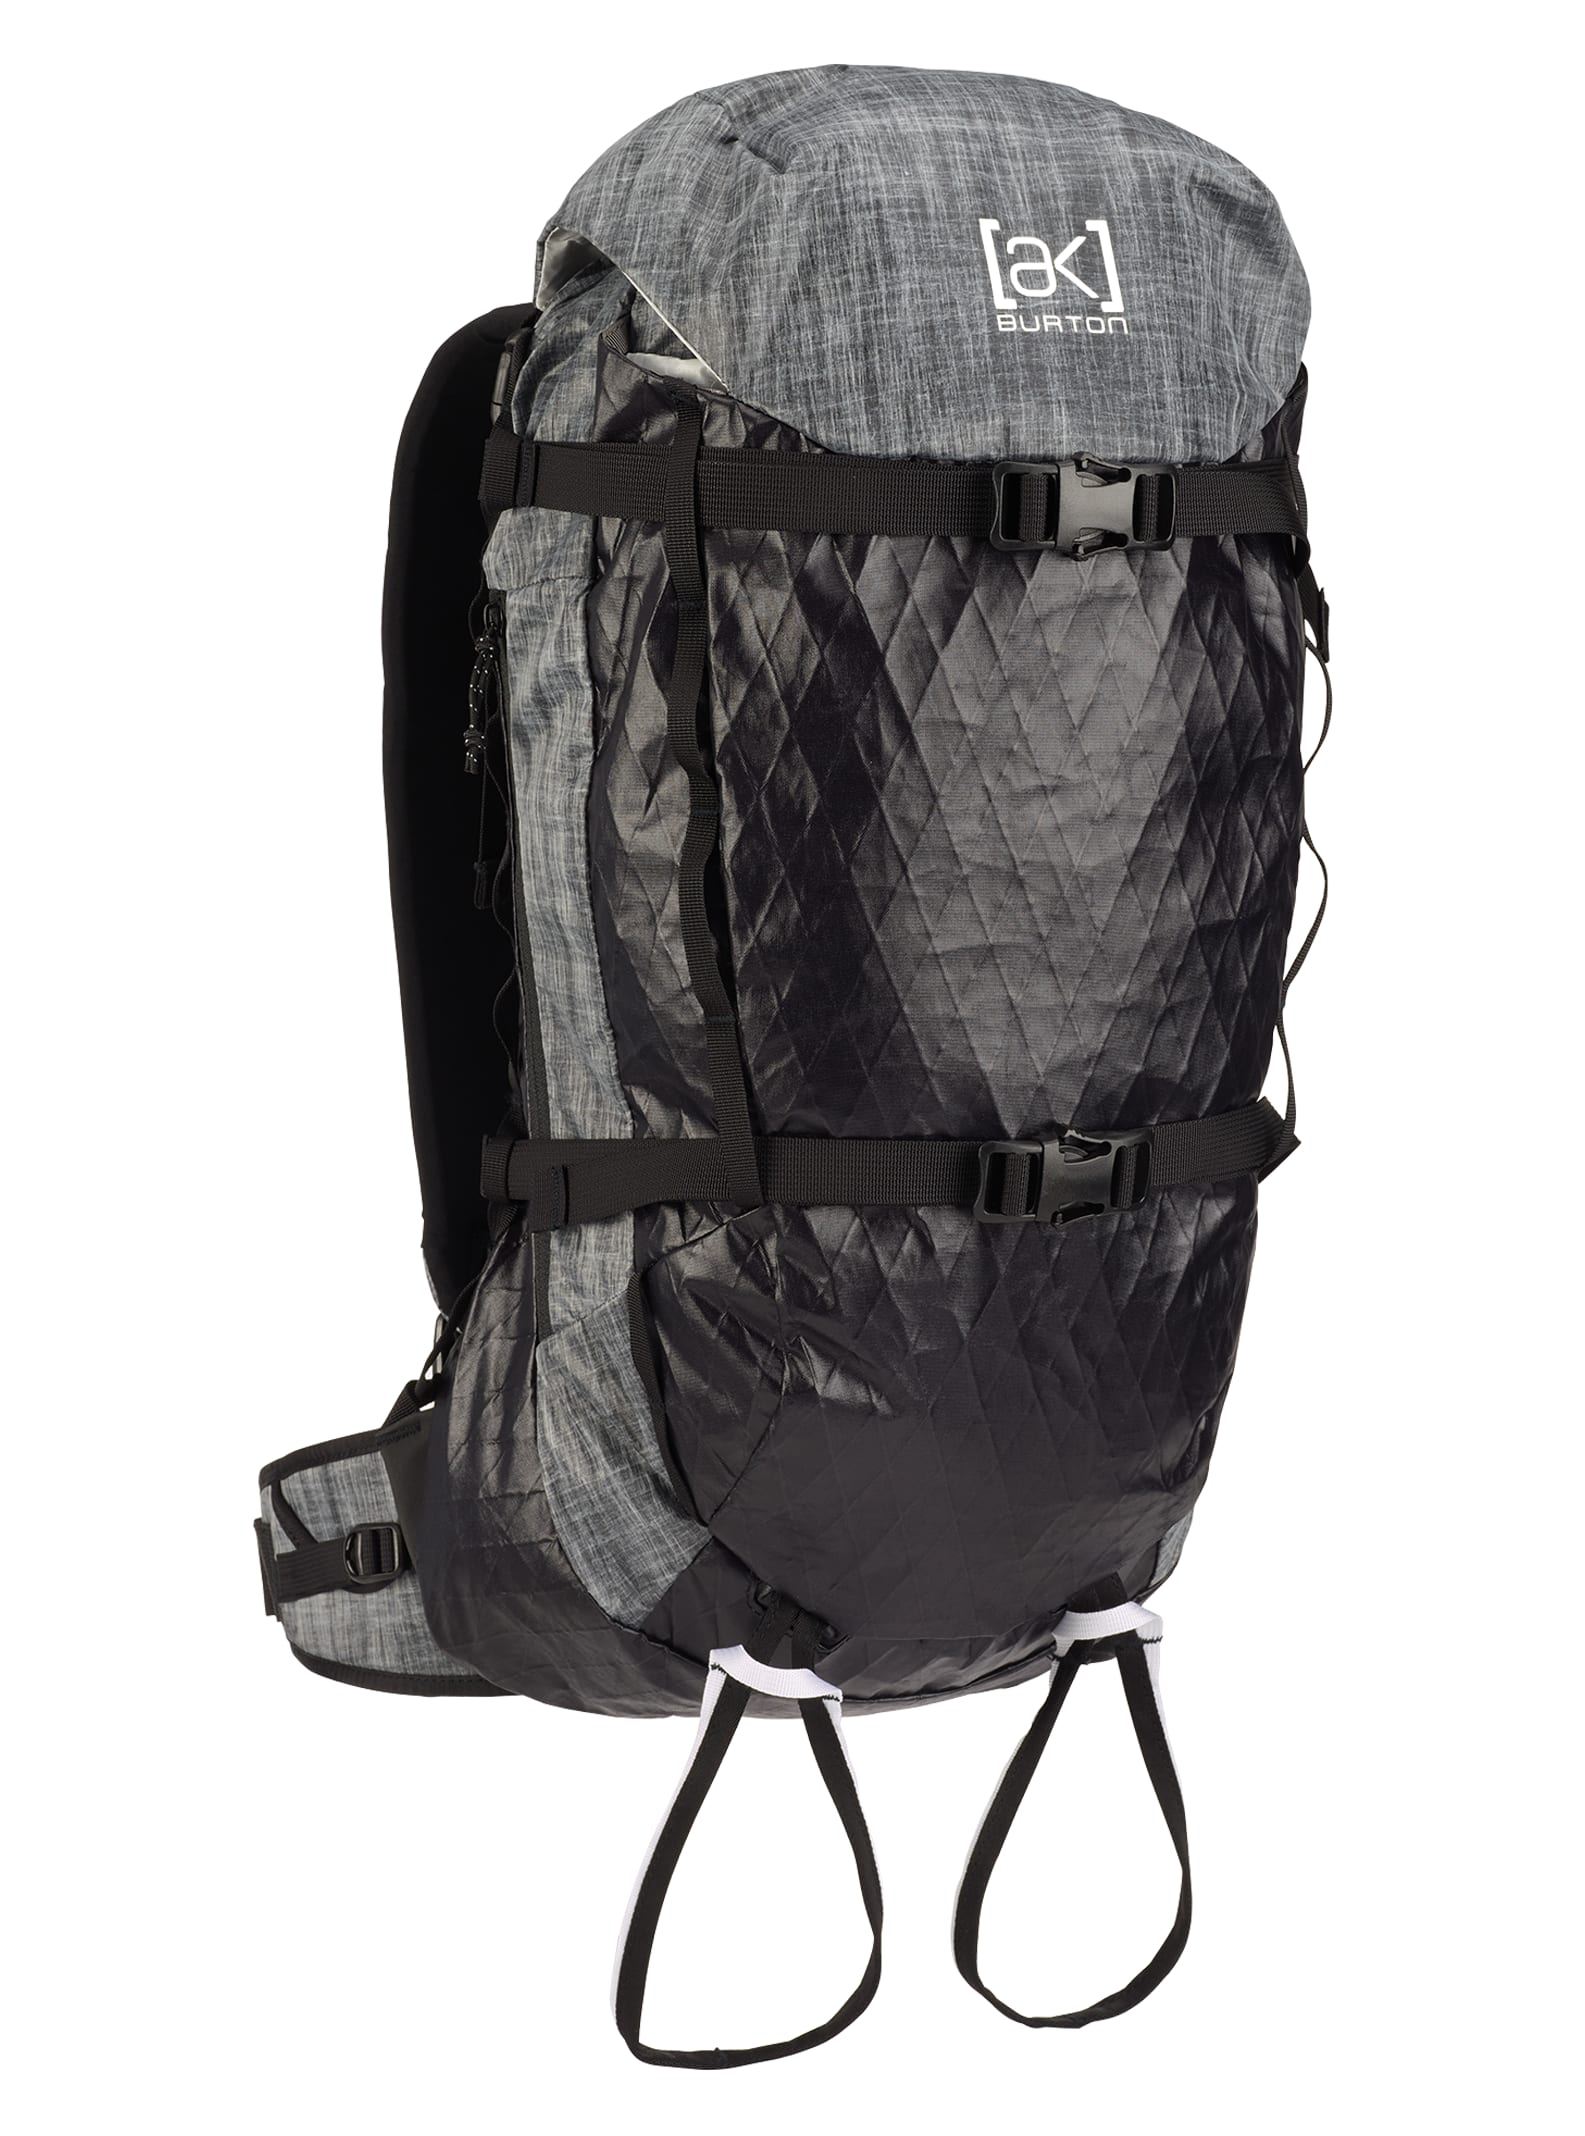 Burton [ak] Incline Ultralight 22L Backpack | Burton.com Spring 2021 US